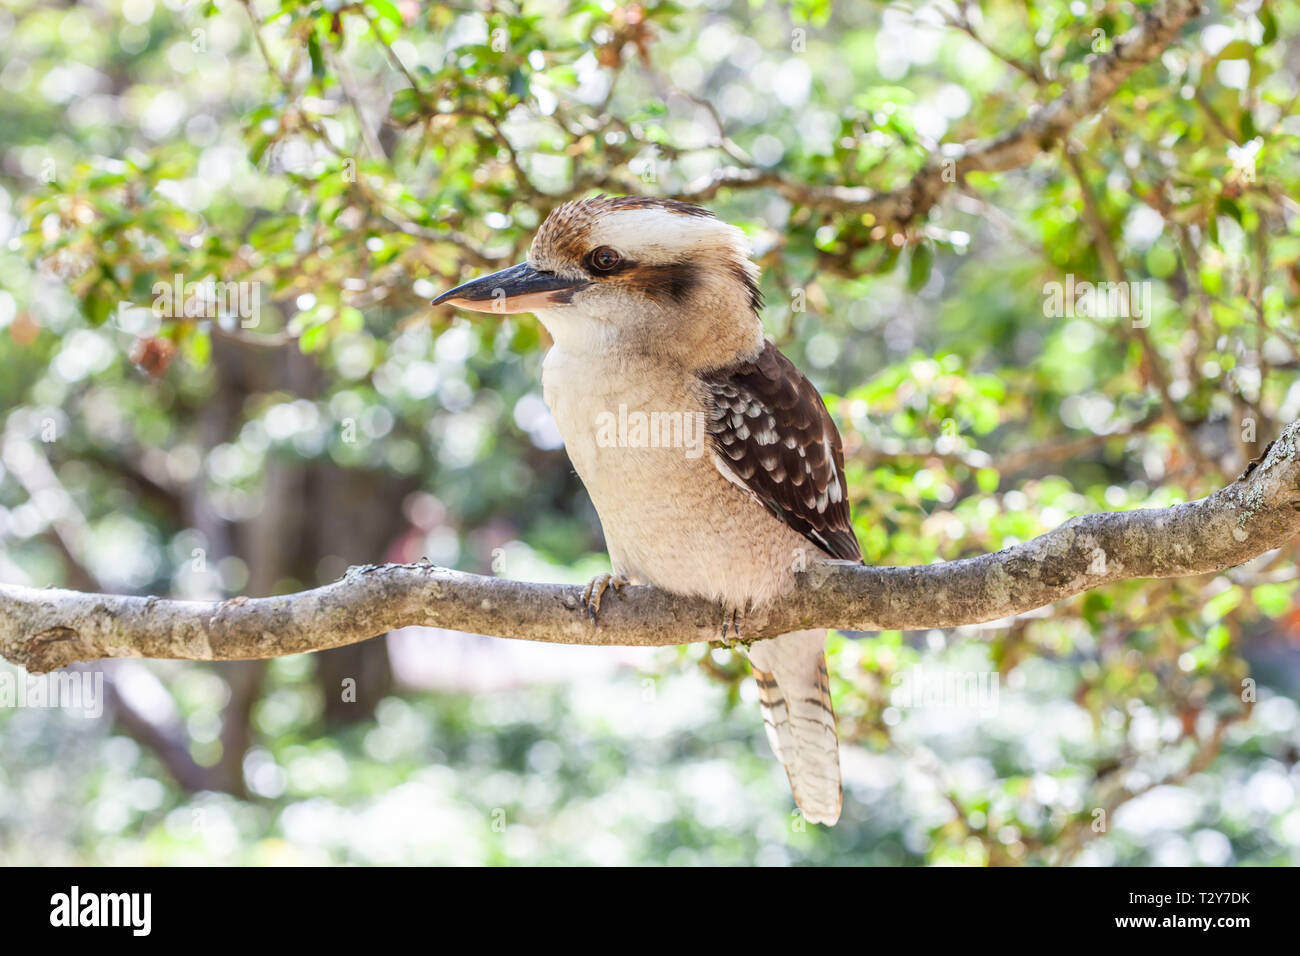 Native Australian bird Laughing Kookaburra on tree branch on blurred background Stock Photo